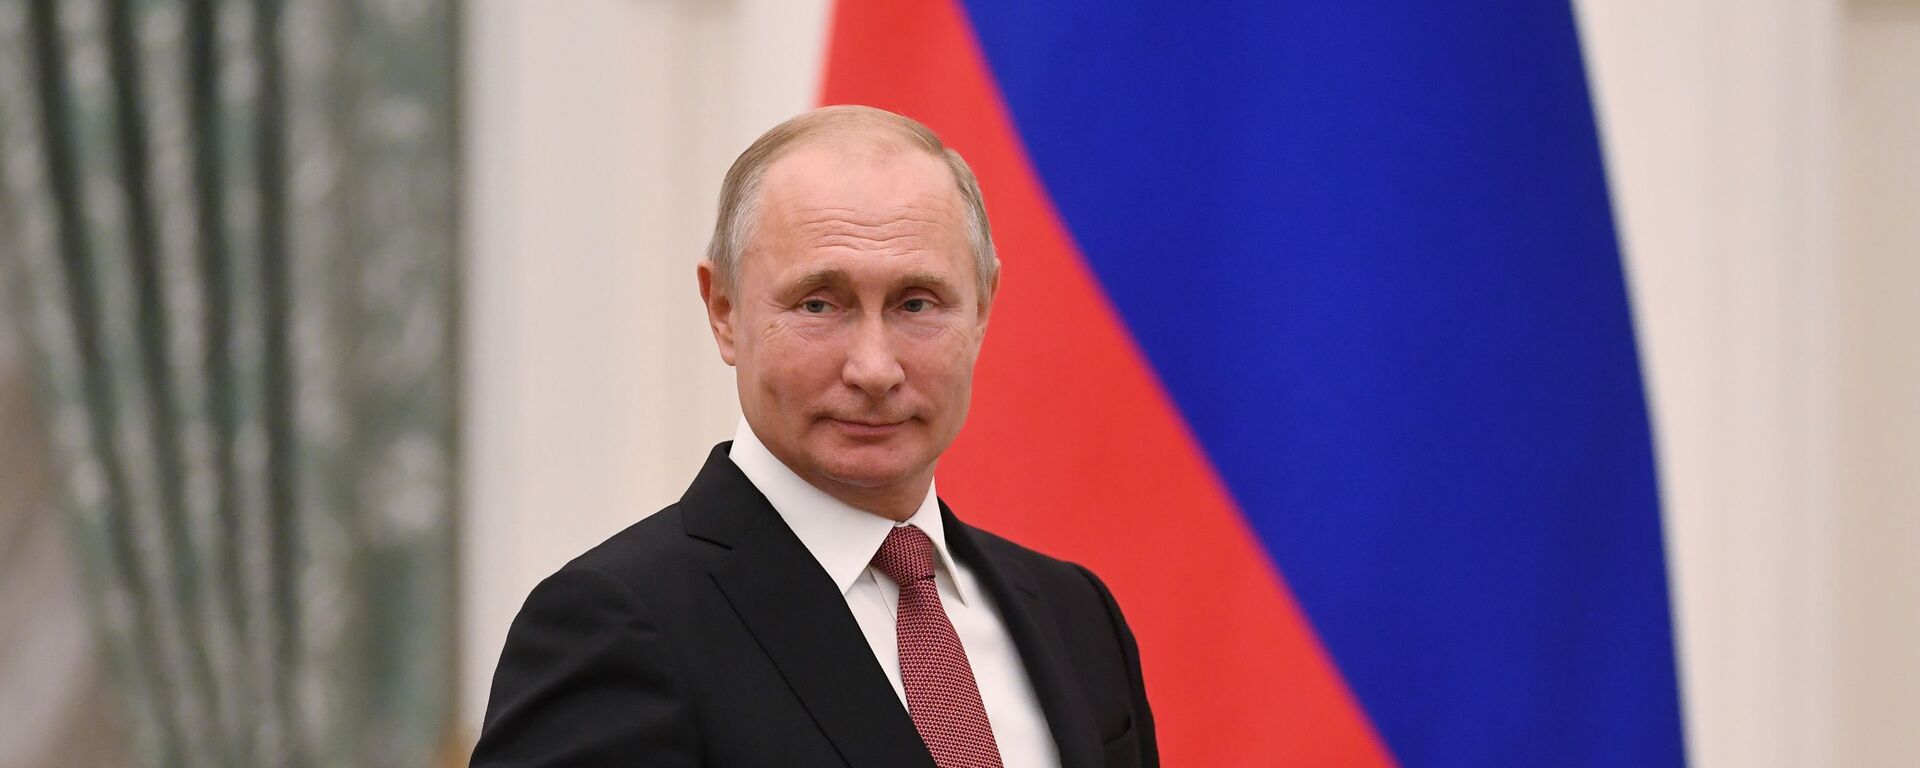 Tổng thống Nga Vladimir Putin. - Sputnik Việt Nam, 1920, 14.12.2021